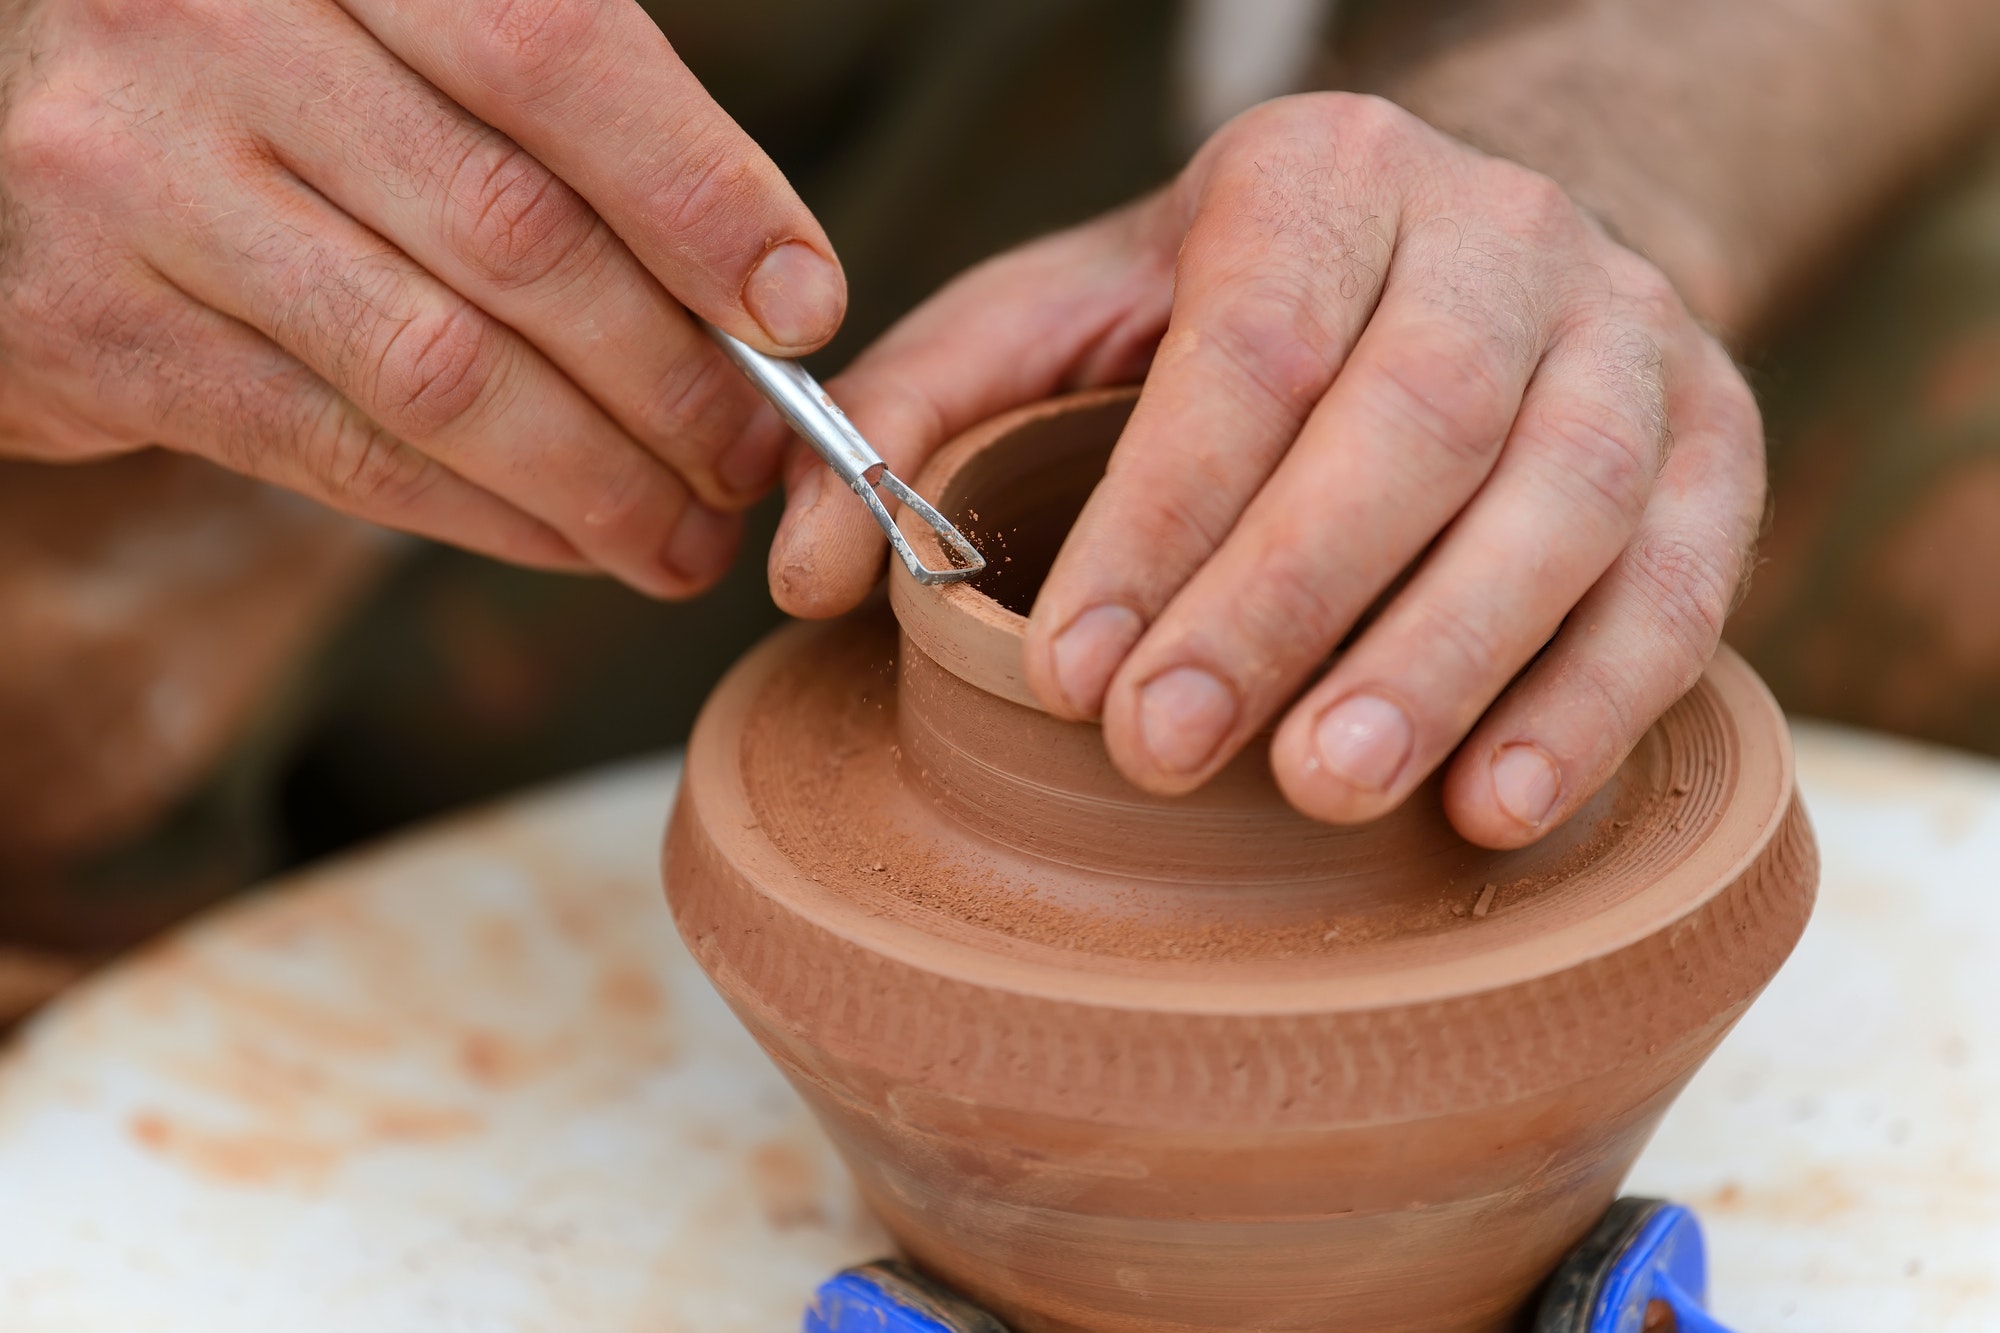 potter-making-ceramic-pot-on-the-pottery-wheel.jpg